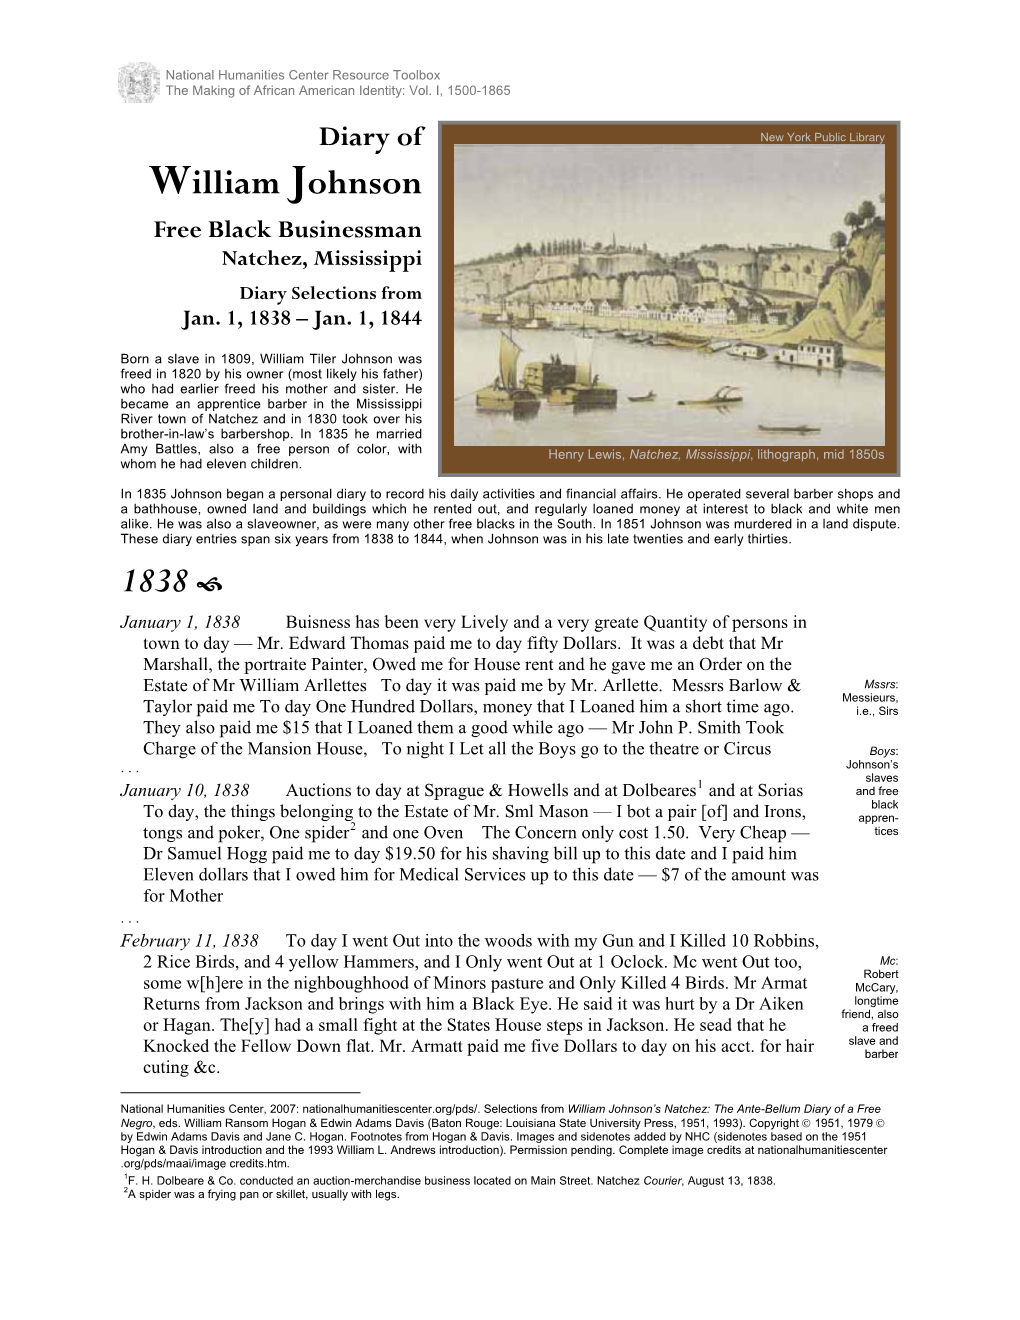 Diary of William Johnson